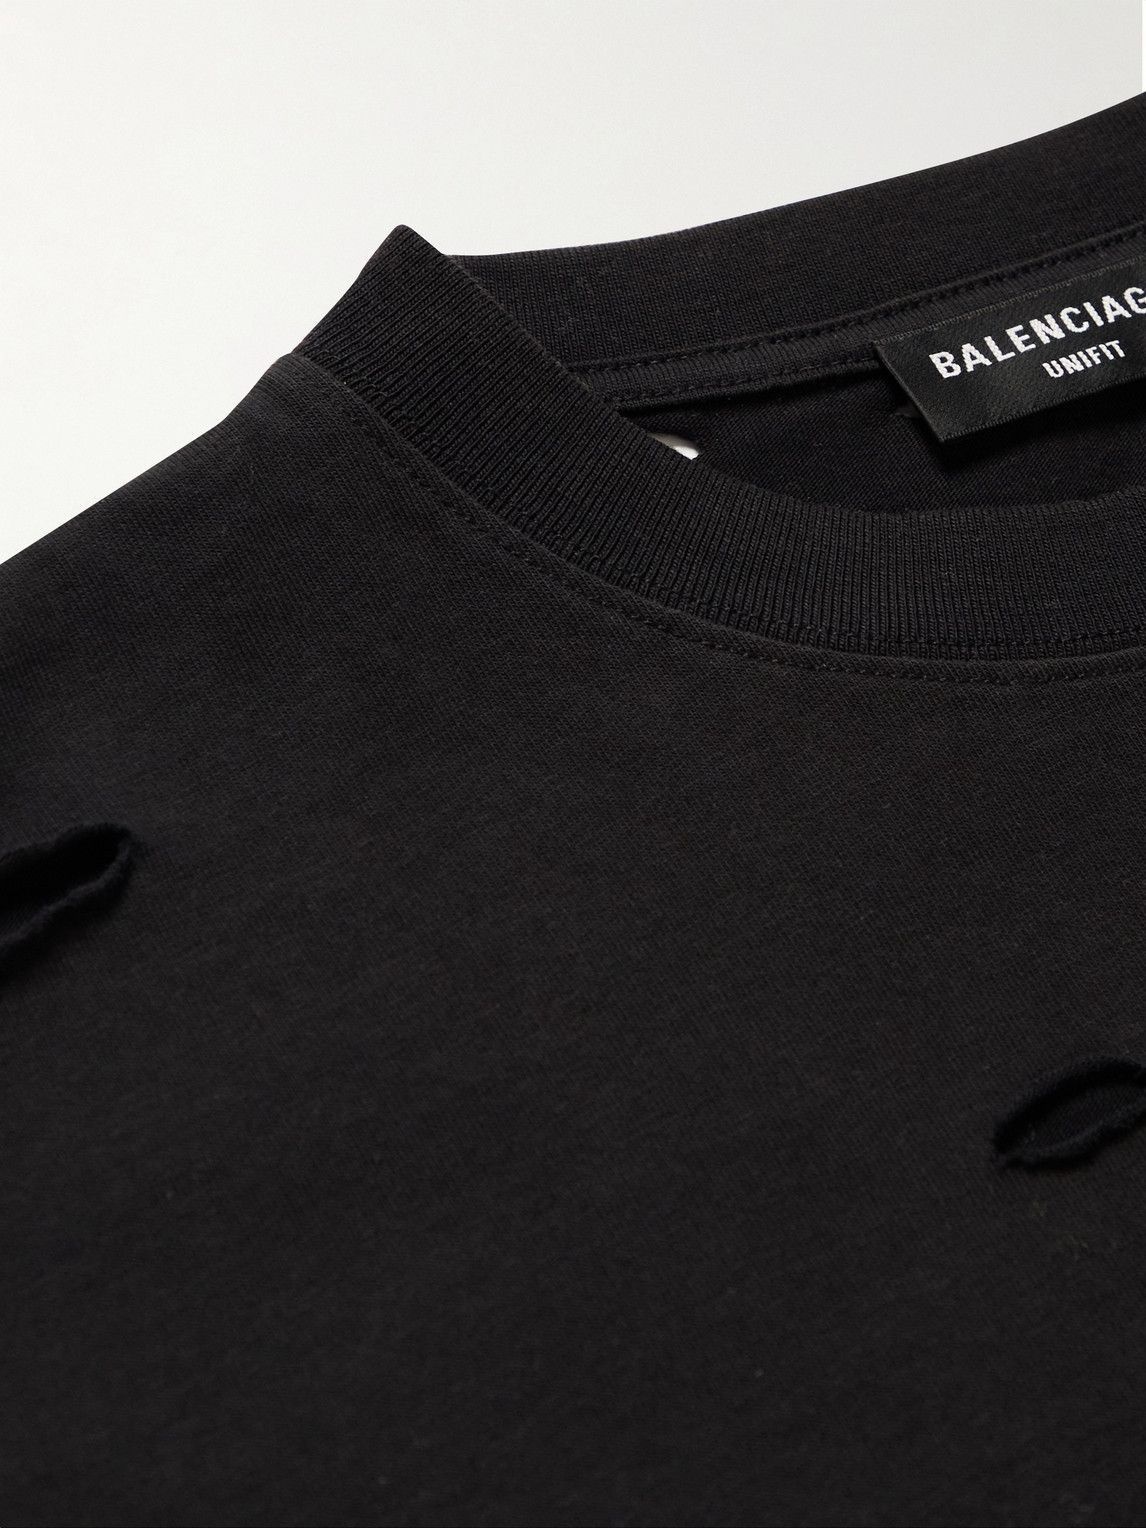 Balenciaga Blurred Logo Distressed T-shirt in Gray for Men